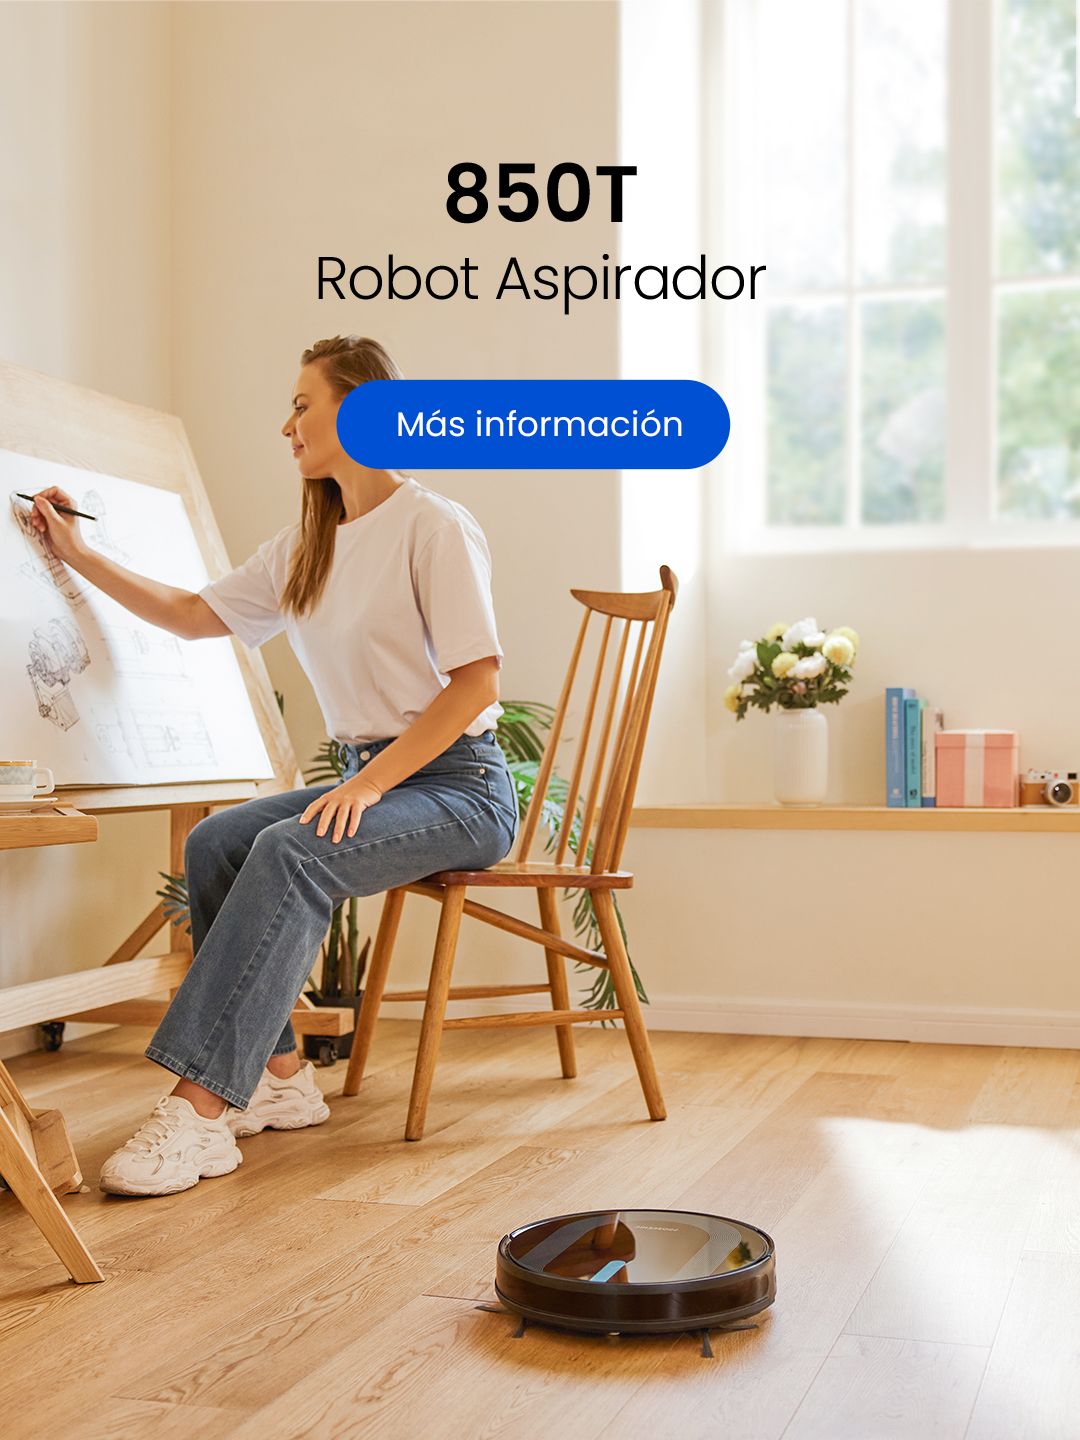 850t robot aspirador